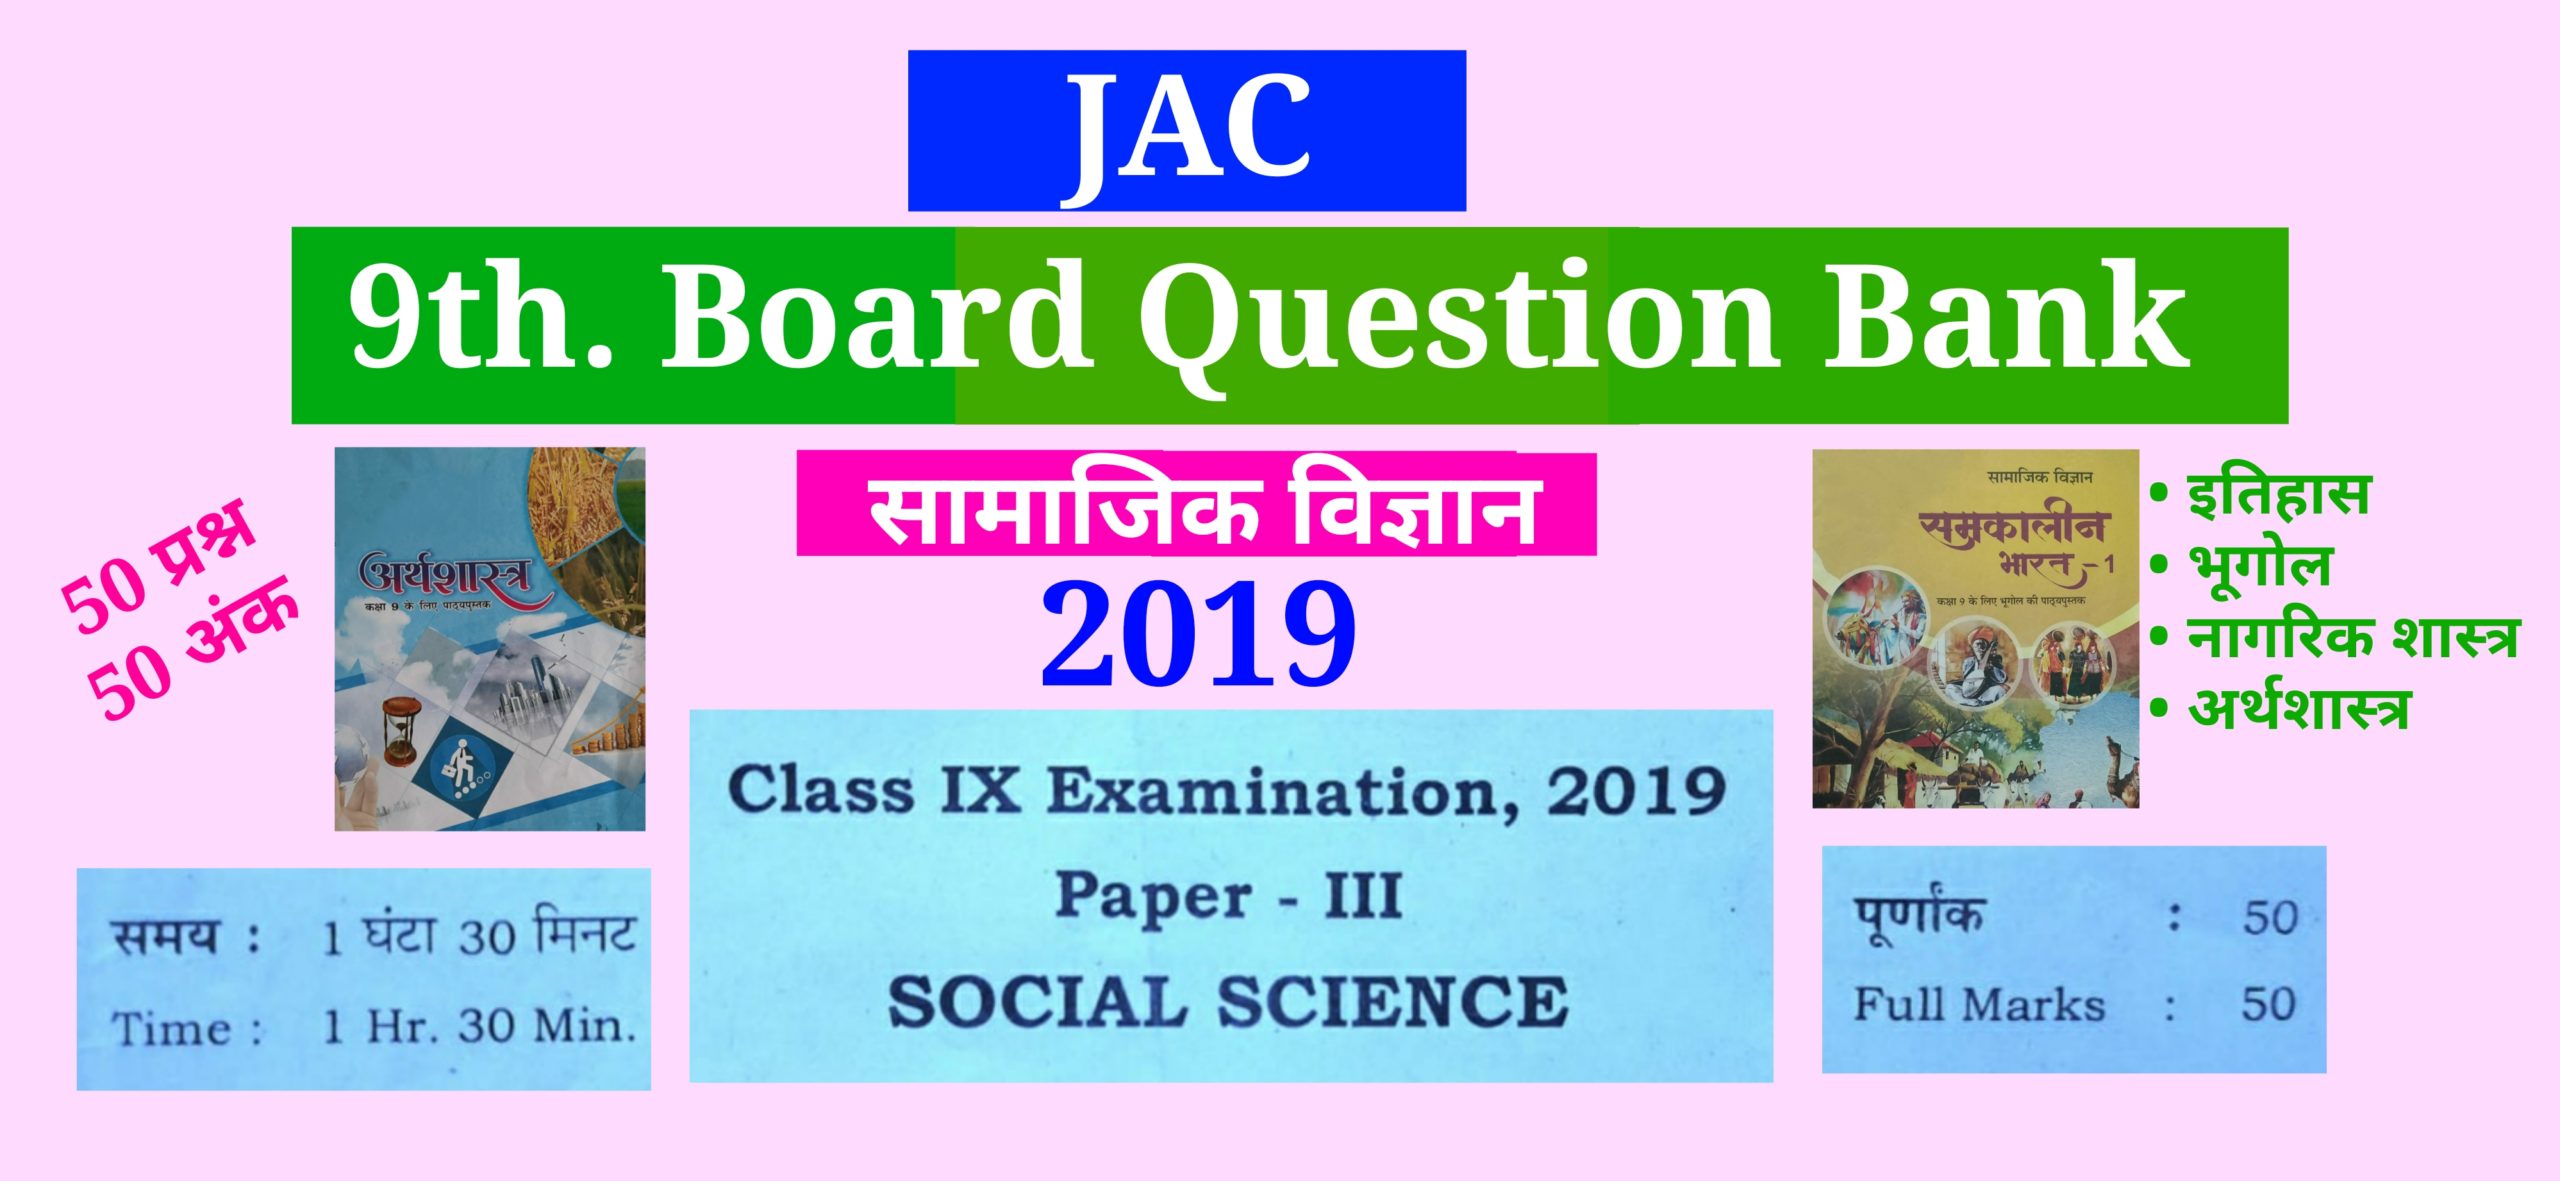 Jac 9th. Board-2019 Question Answer